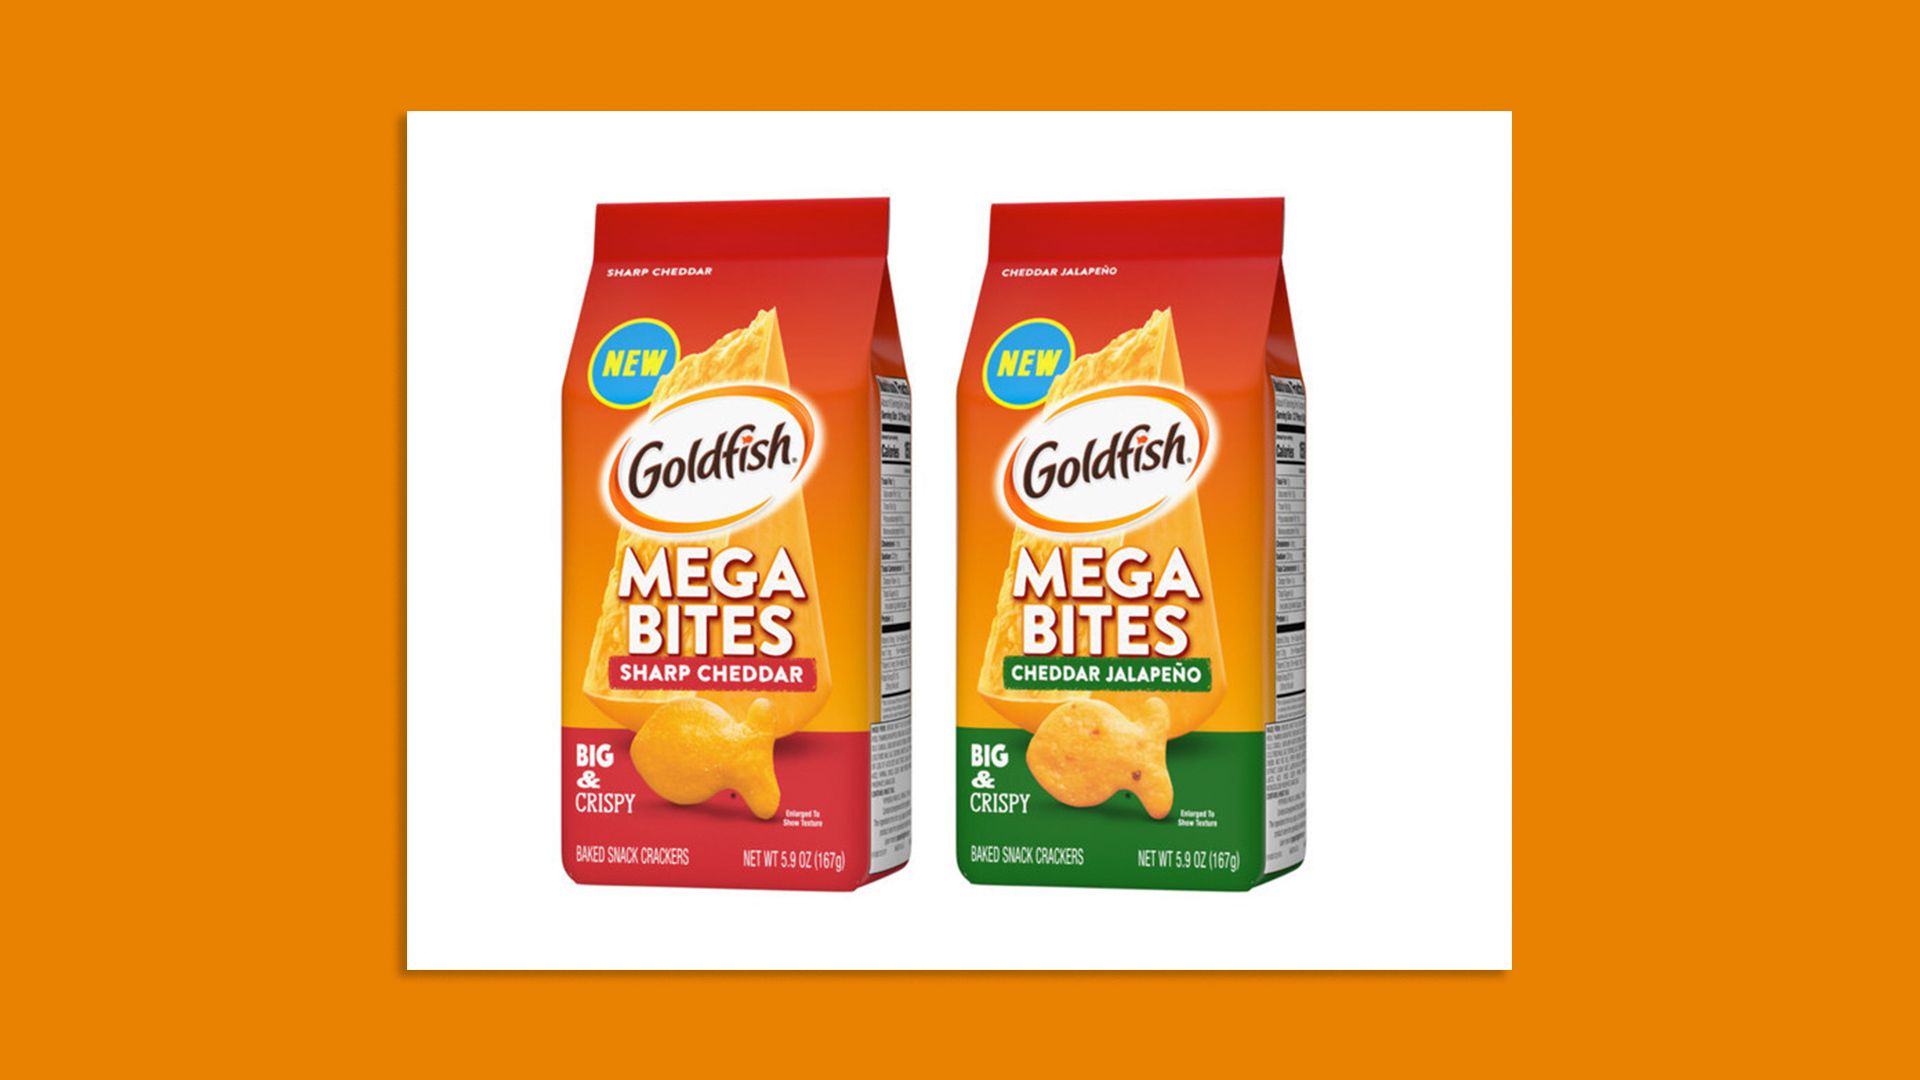 Bags of new Goldfish Mega Bites crackers